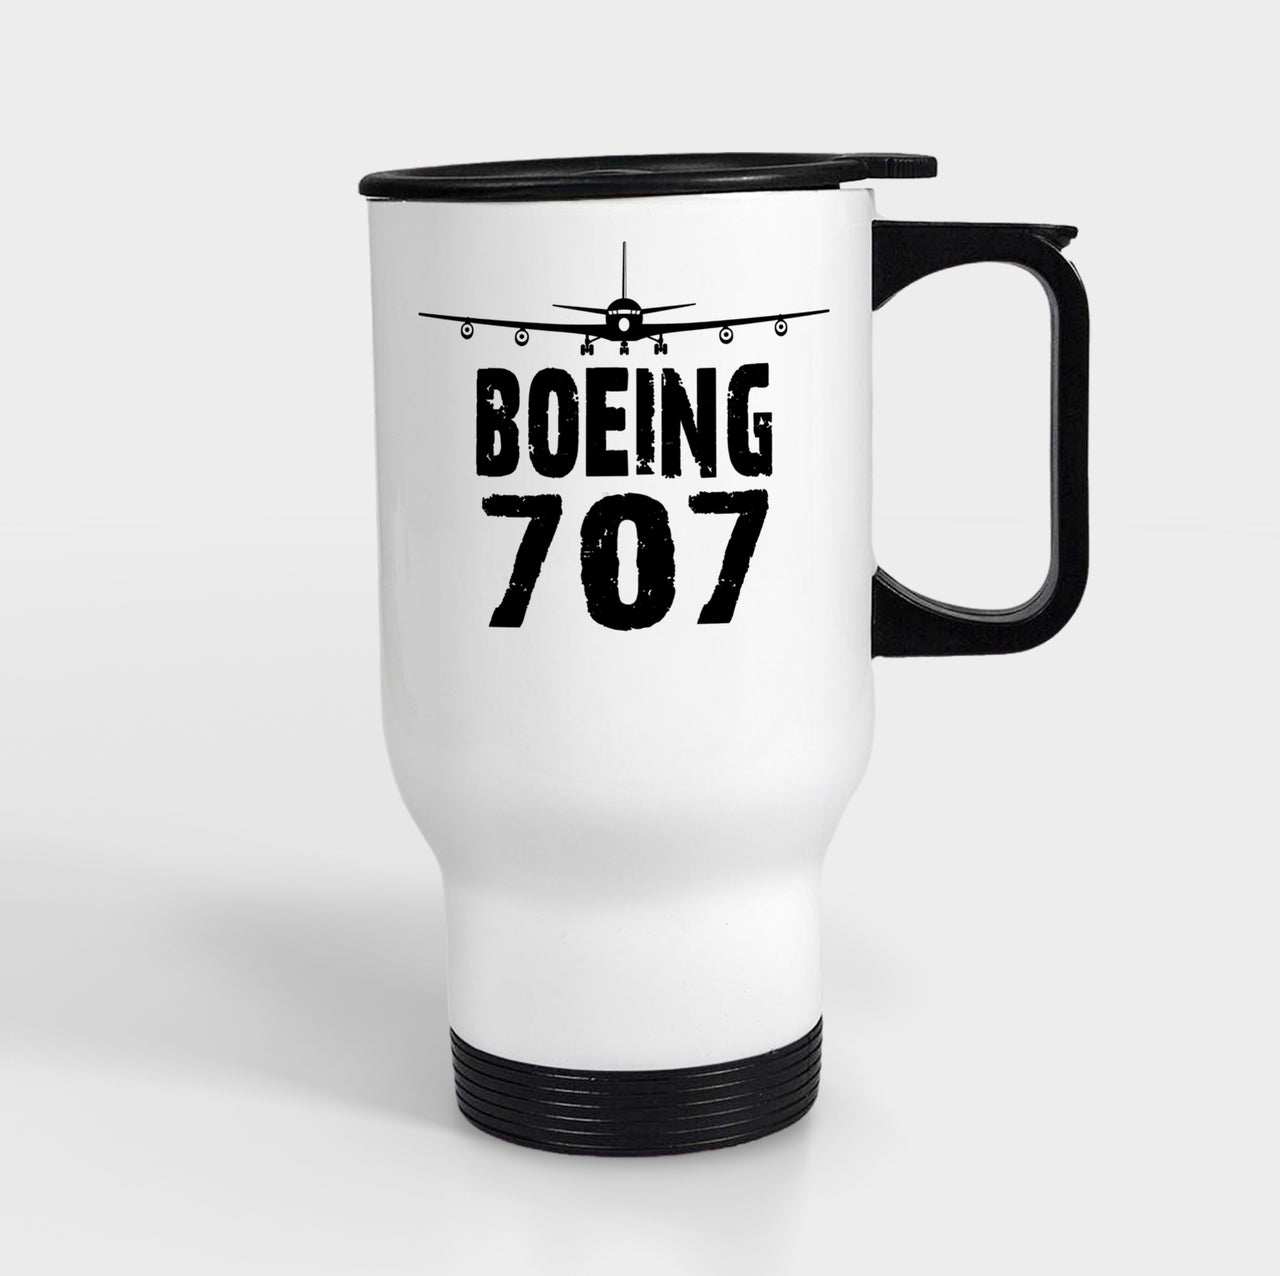 Boeing 707 & Plane Designed Travel Mugs (With Holder)